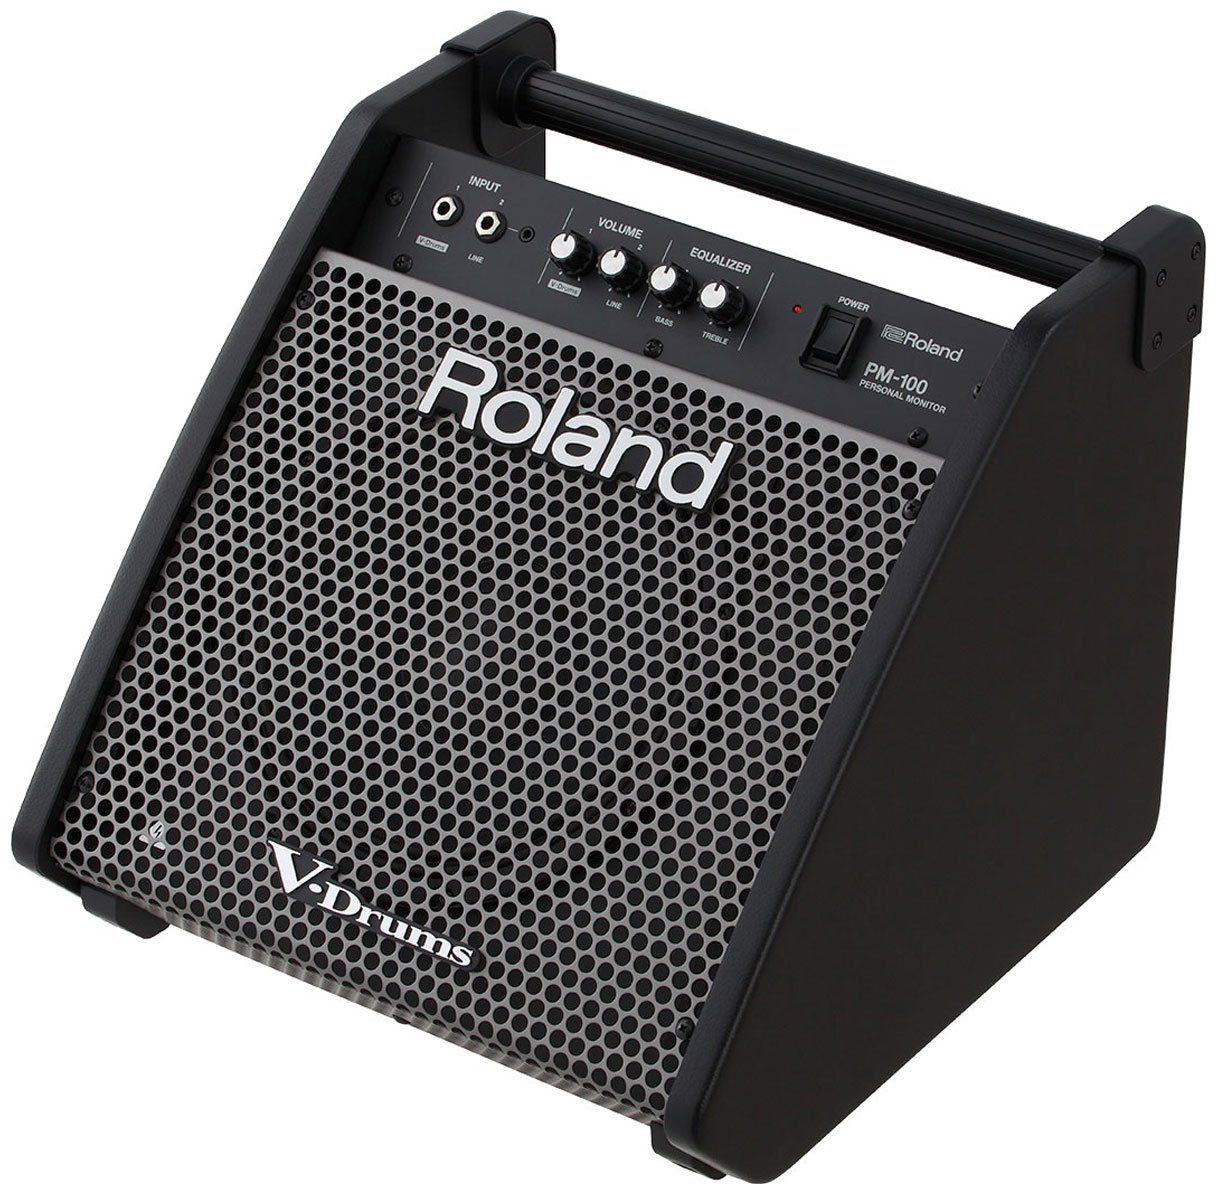 Roland Audio Roland PM-100 E-Drum Monitor Box Home Speaker (80 W)